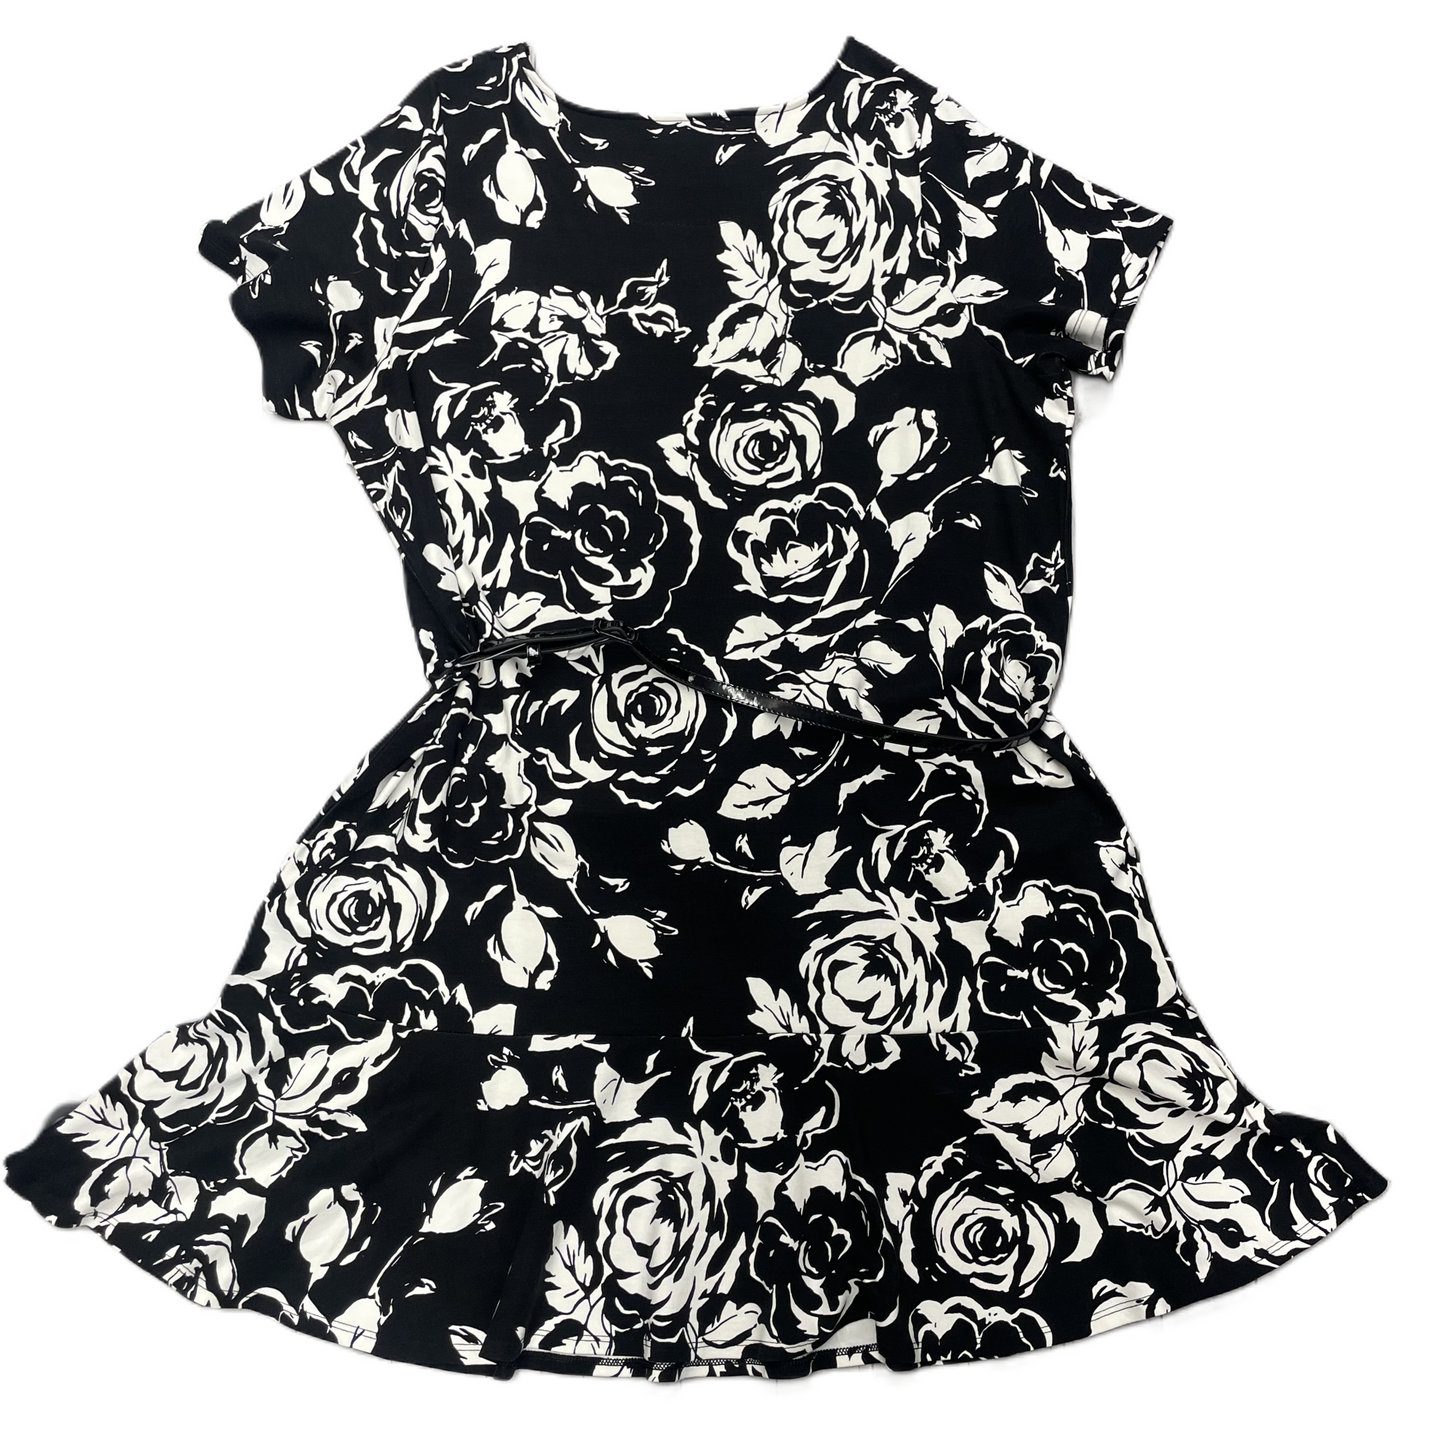 Black White Dress Party Short By Lauren By Ralph Lauren, Size: 3x